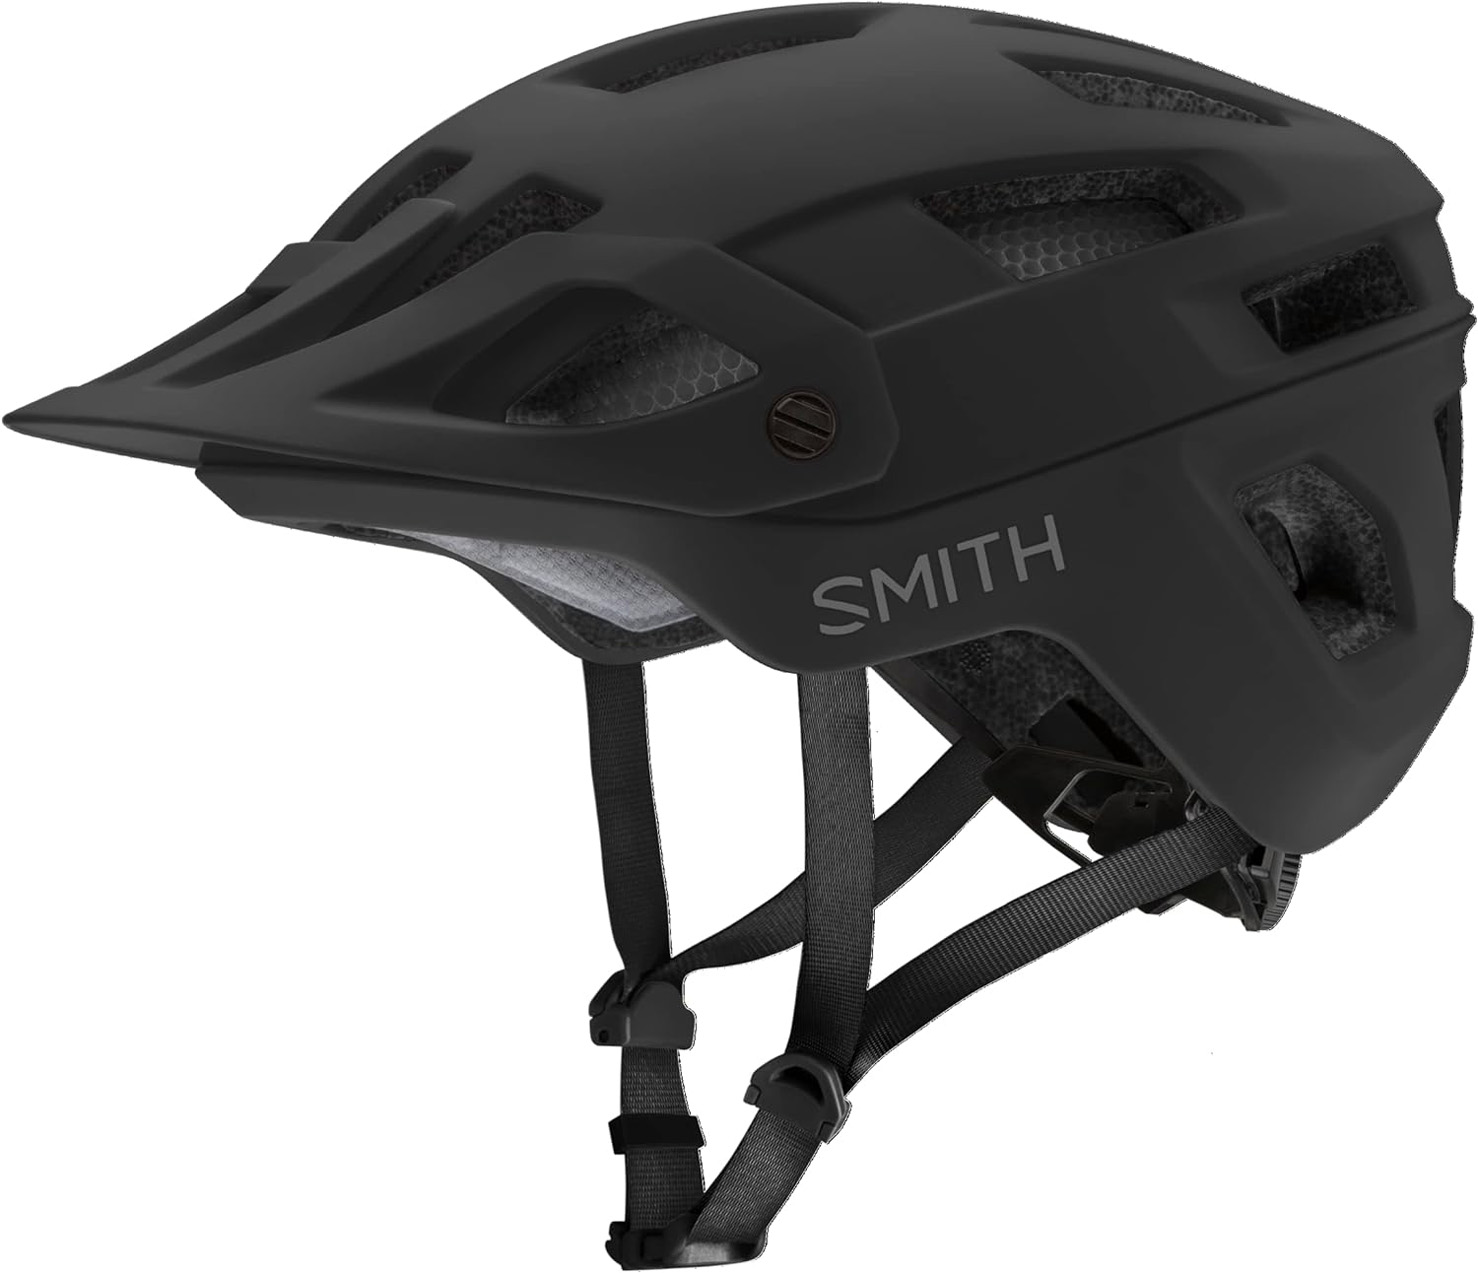 SMITH Engage MIPS Mountain Cycling Helmet – Matte Black ’22 – Medium